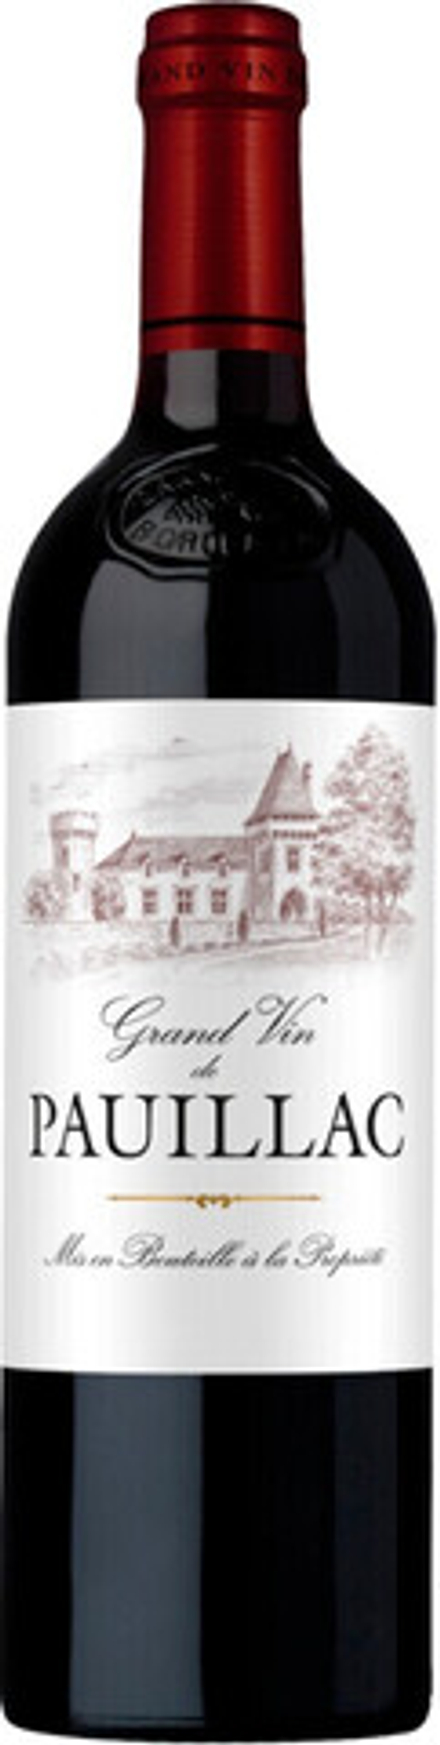 Вино Maison Ginestet Grand Vin de Pauillac, 0,75 л.